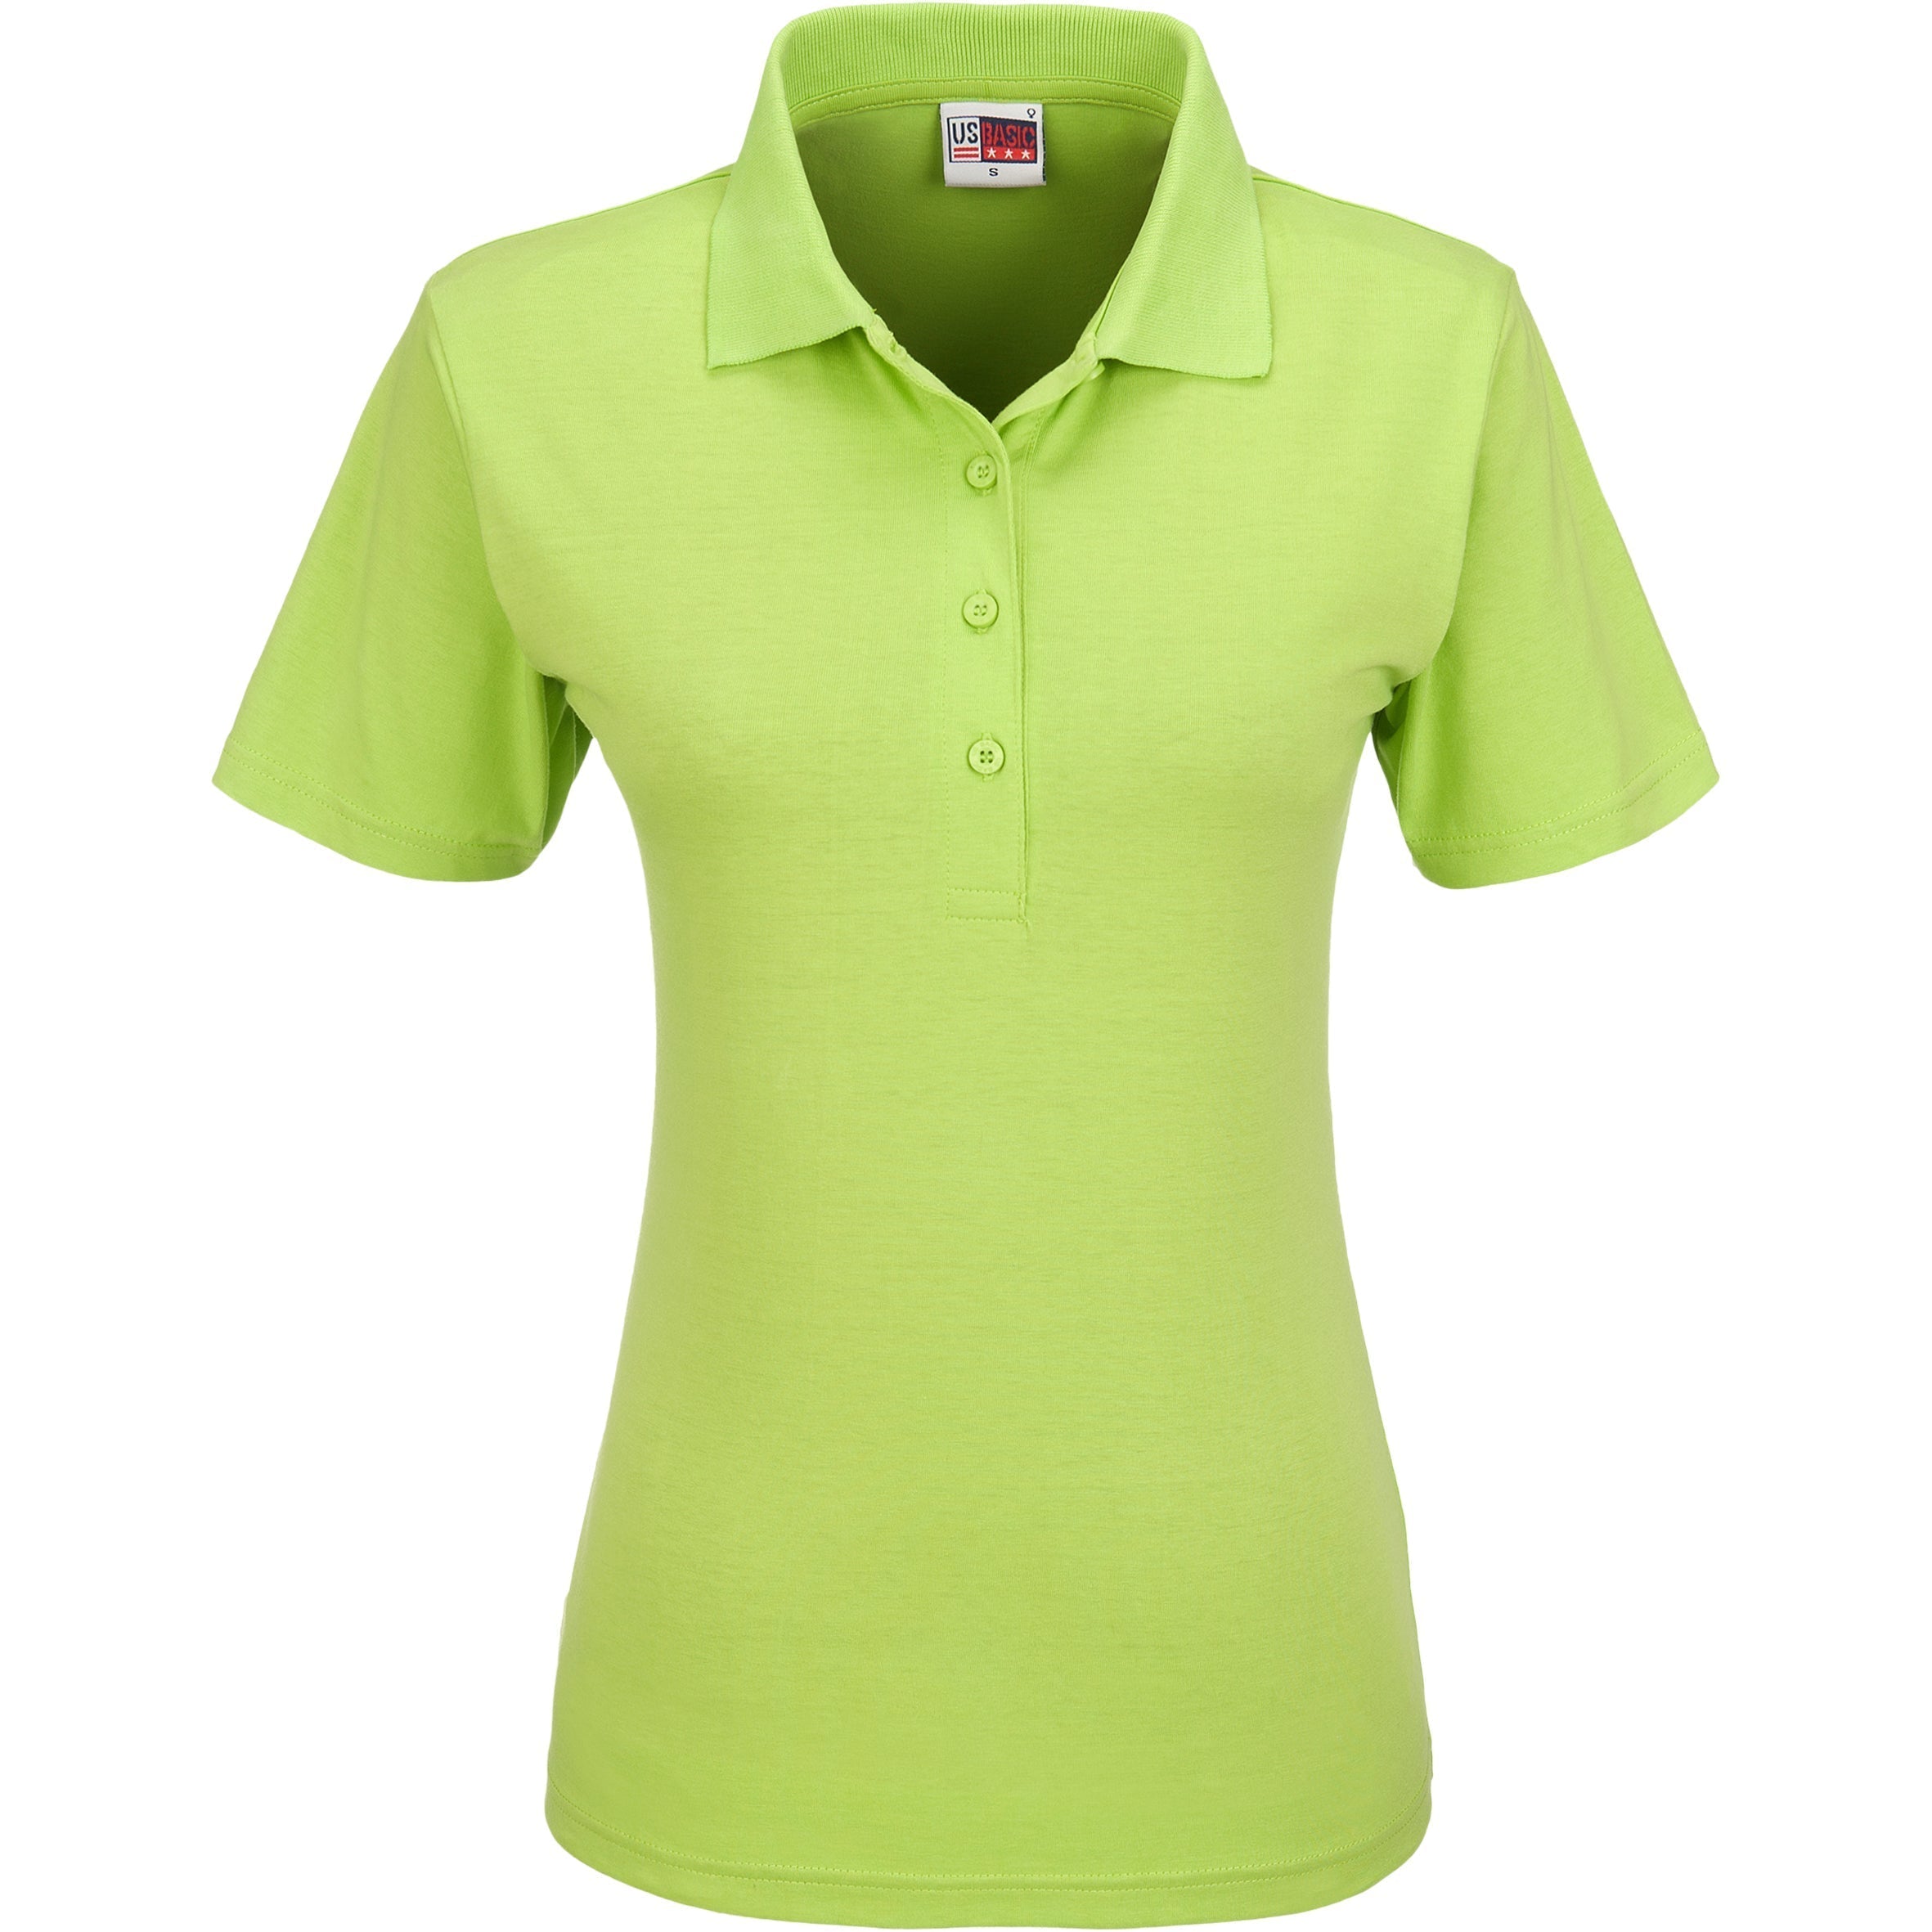 Ladies Cardinal Golf Shirt - Orange Only-L-Lime-L